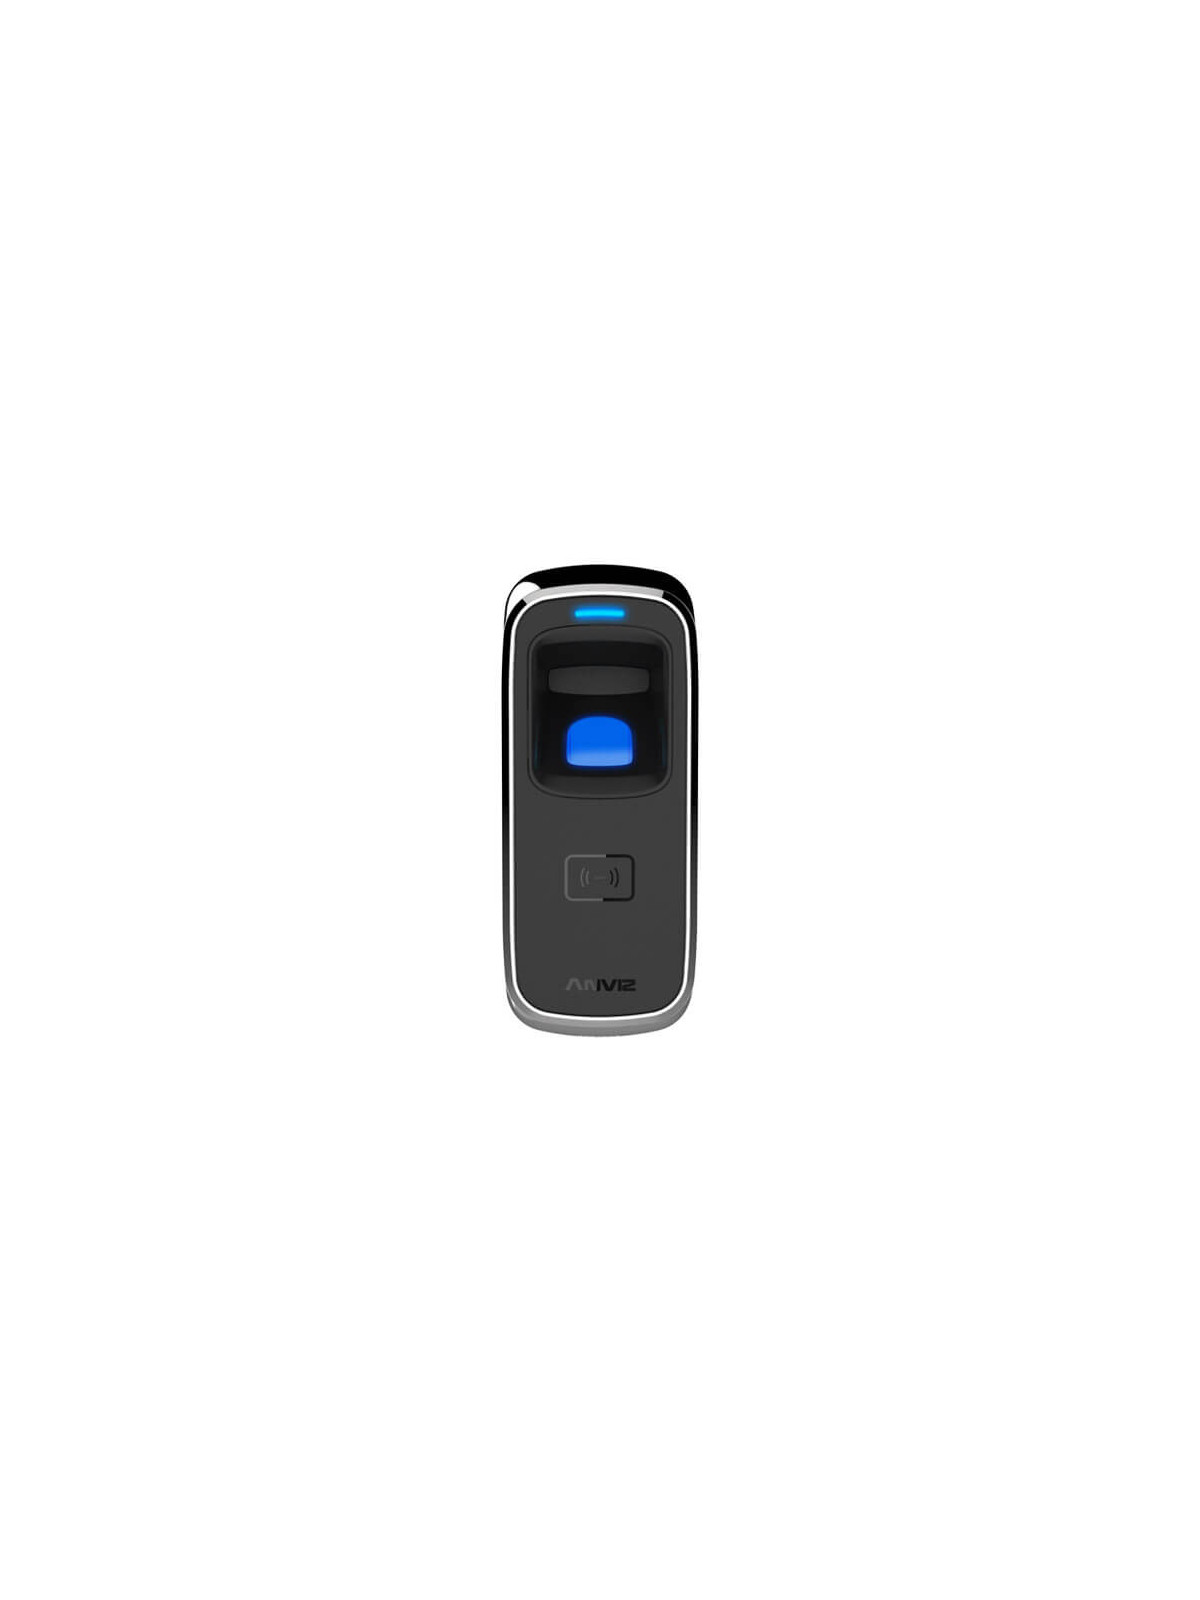 Lector biométrico autónomo Anviz M5PLUS-BT-WIFI Huellas RFID Wifi Bluetooth Wiegand IP65